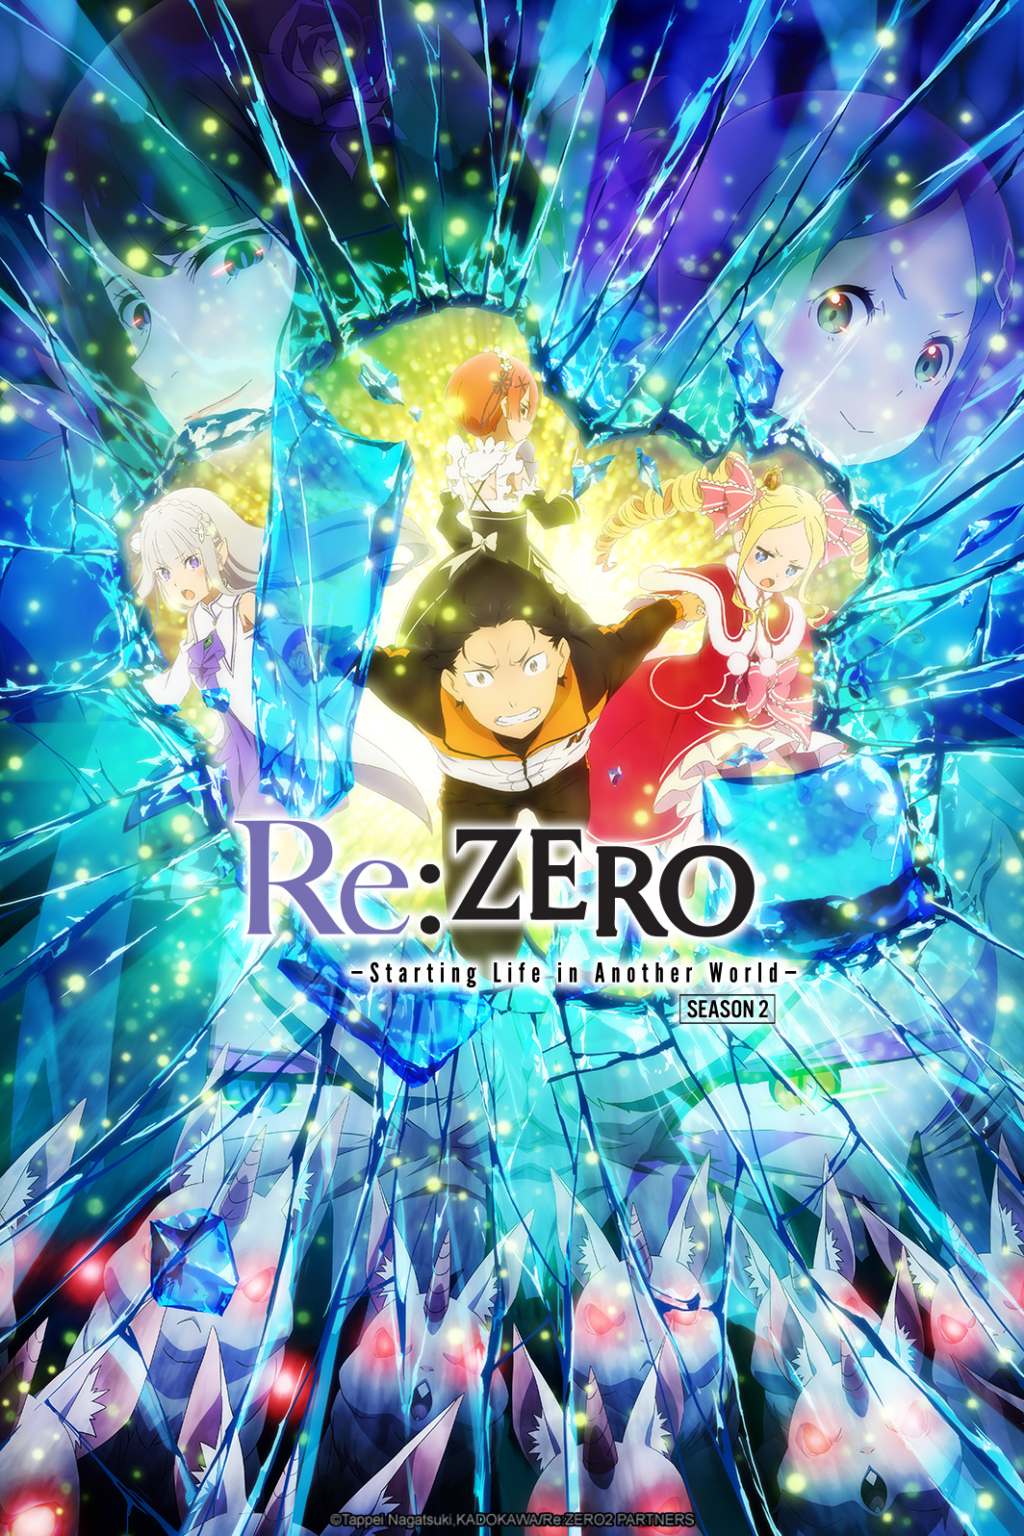 Aldnoah.Zero - Season 2 • Anime UK News